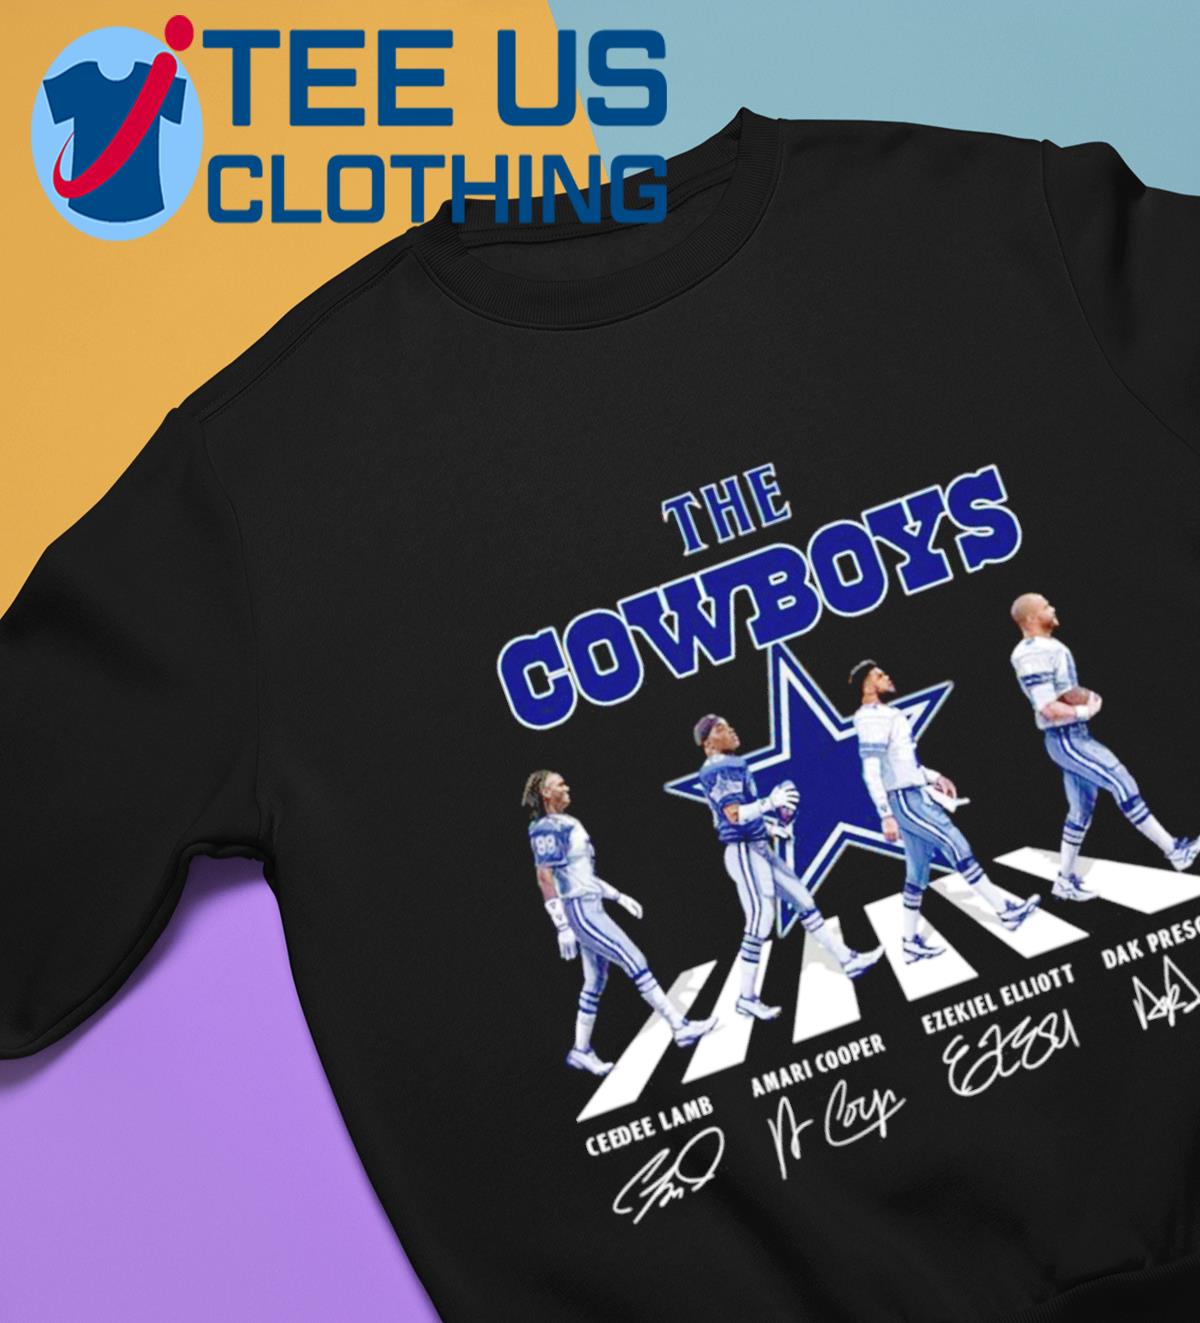 The Dallas Cowboys Abbey Road Signatures Shirt